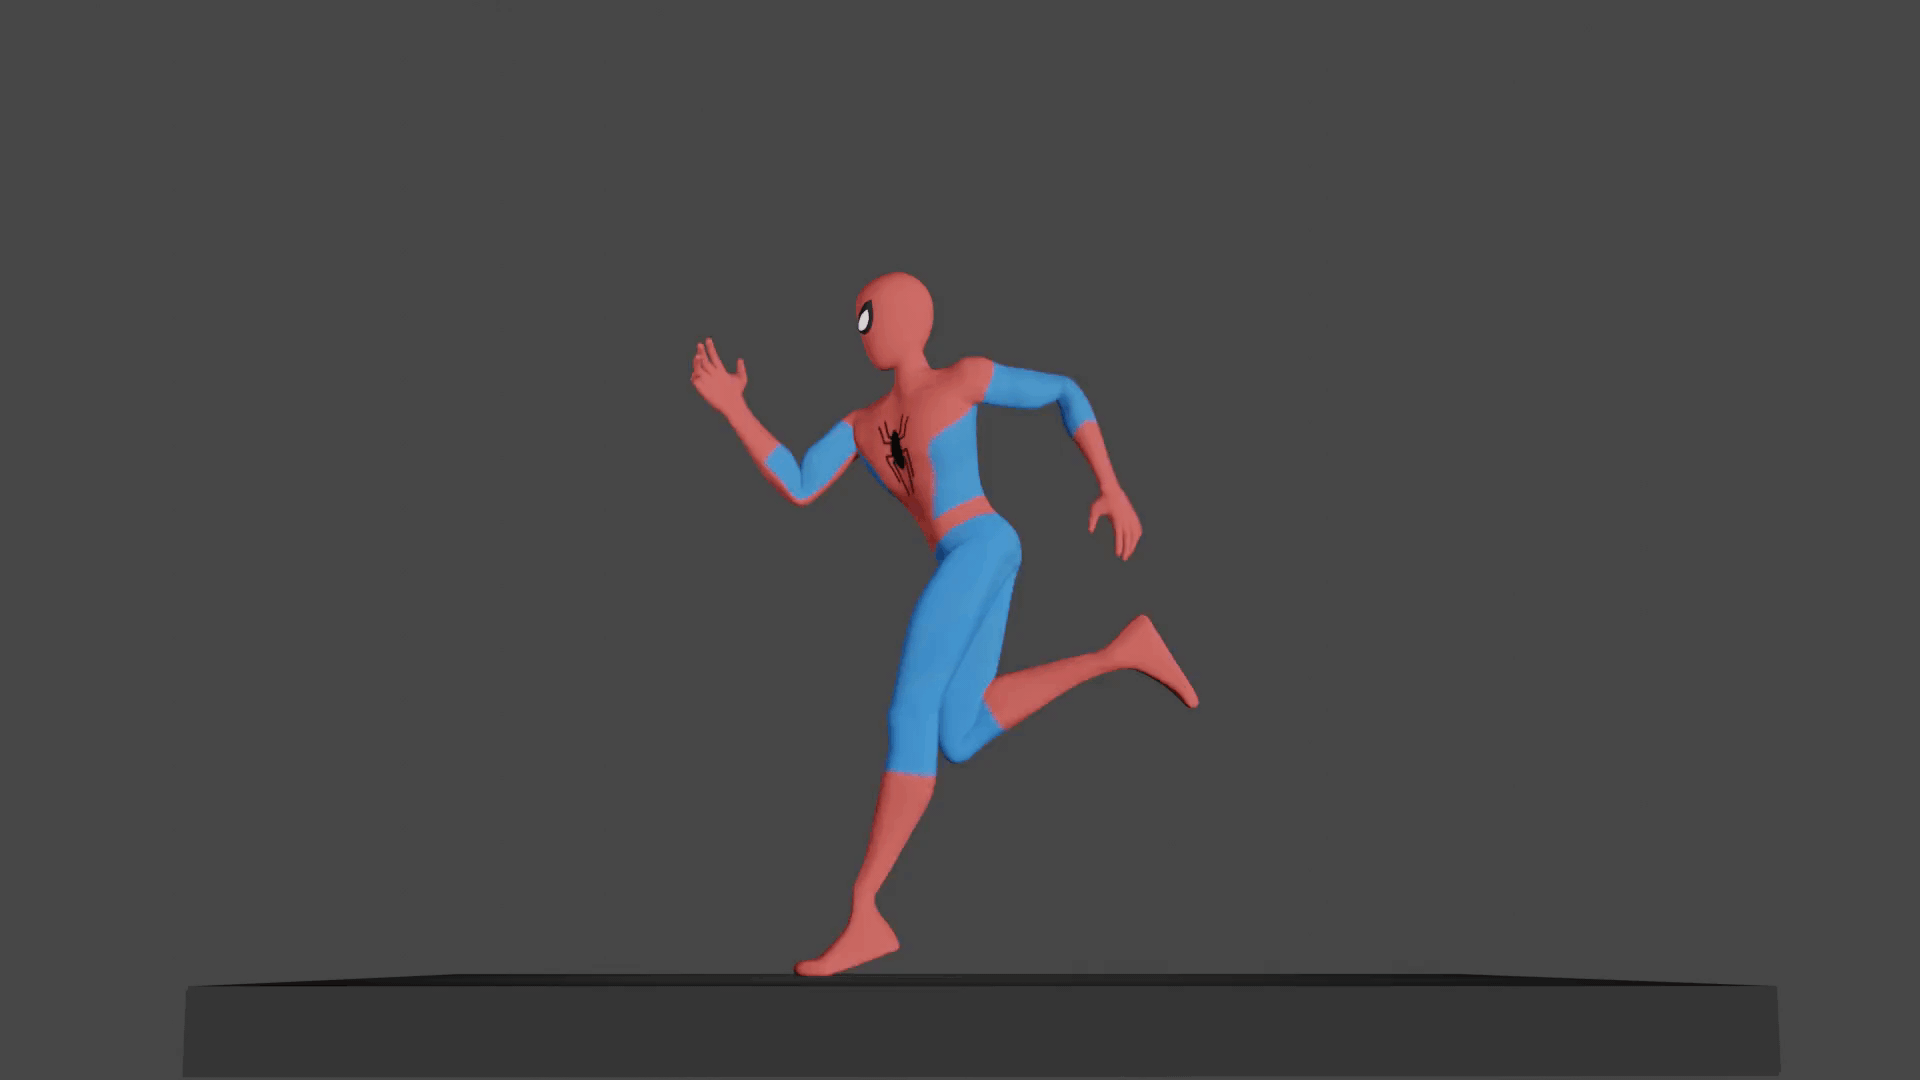 ArtStation - Spider man run animation